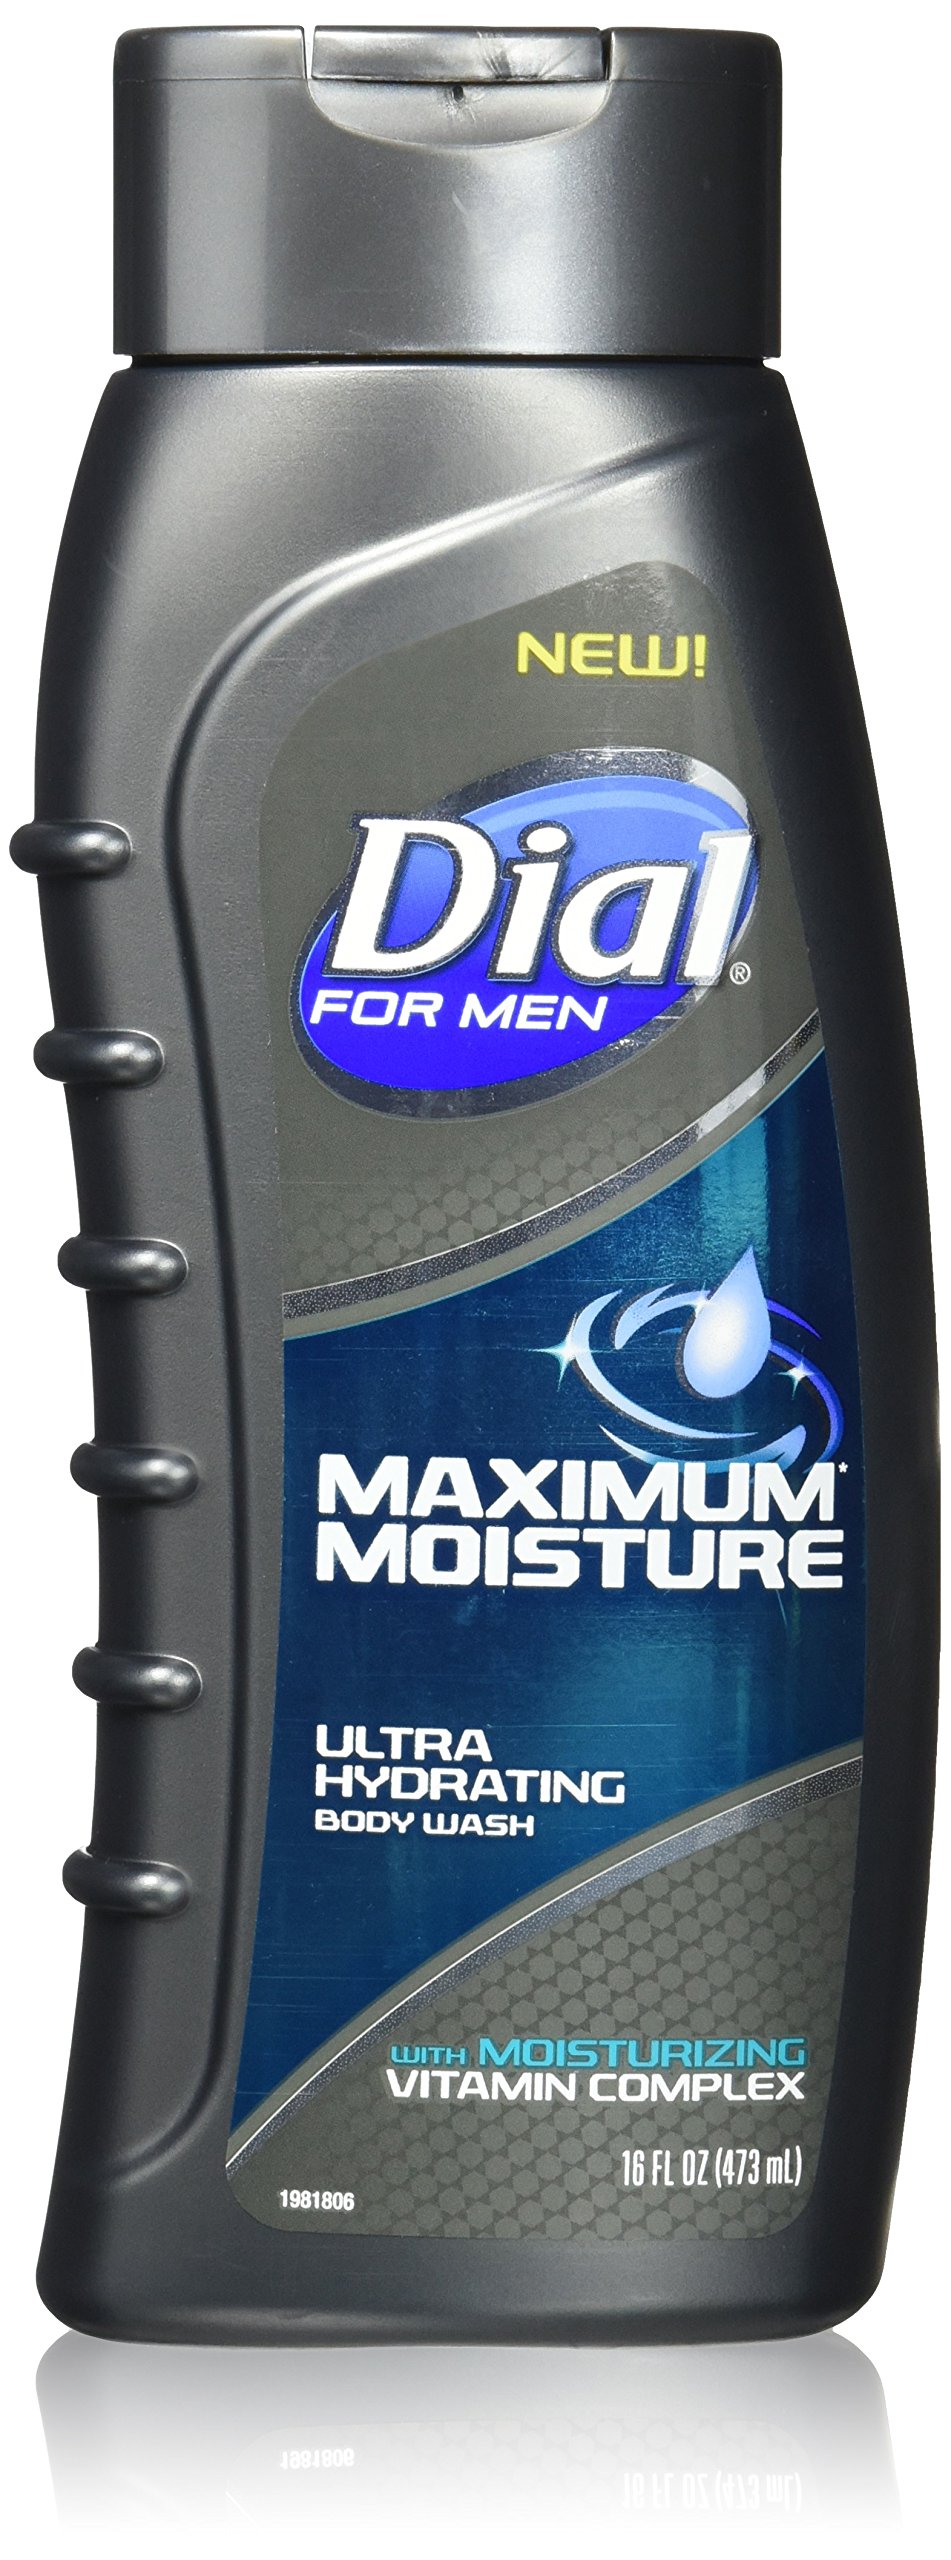 Dial for Men Maximum Moisture Ultra Hydrating Body Wash, 16 Fl. Oz., Pack of 2